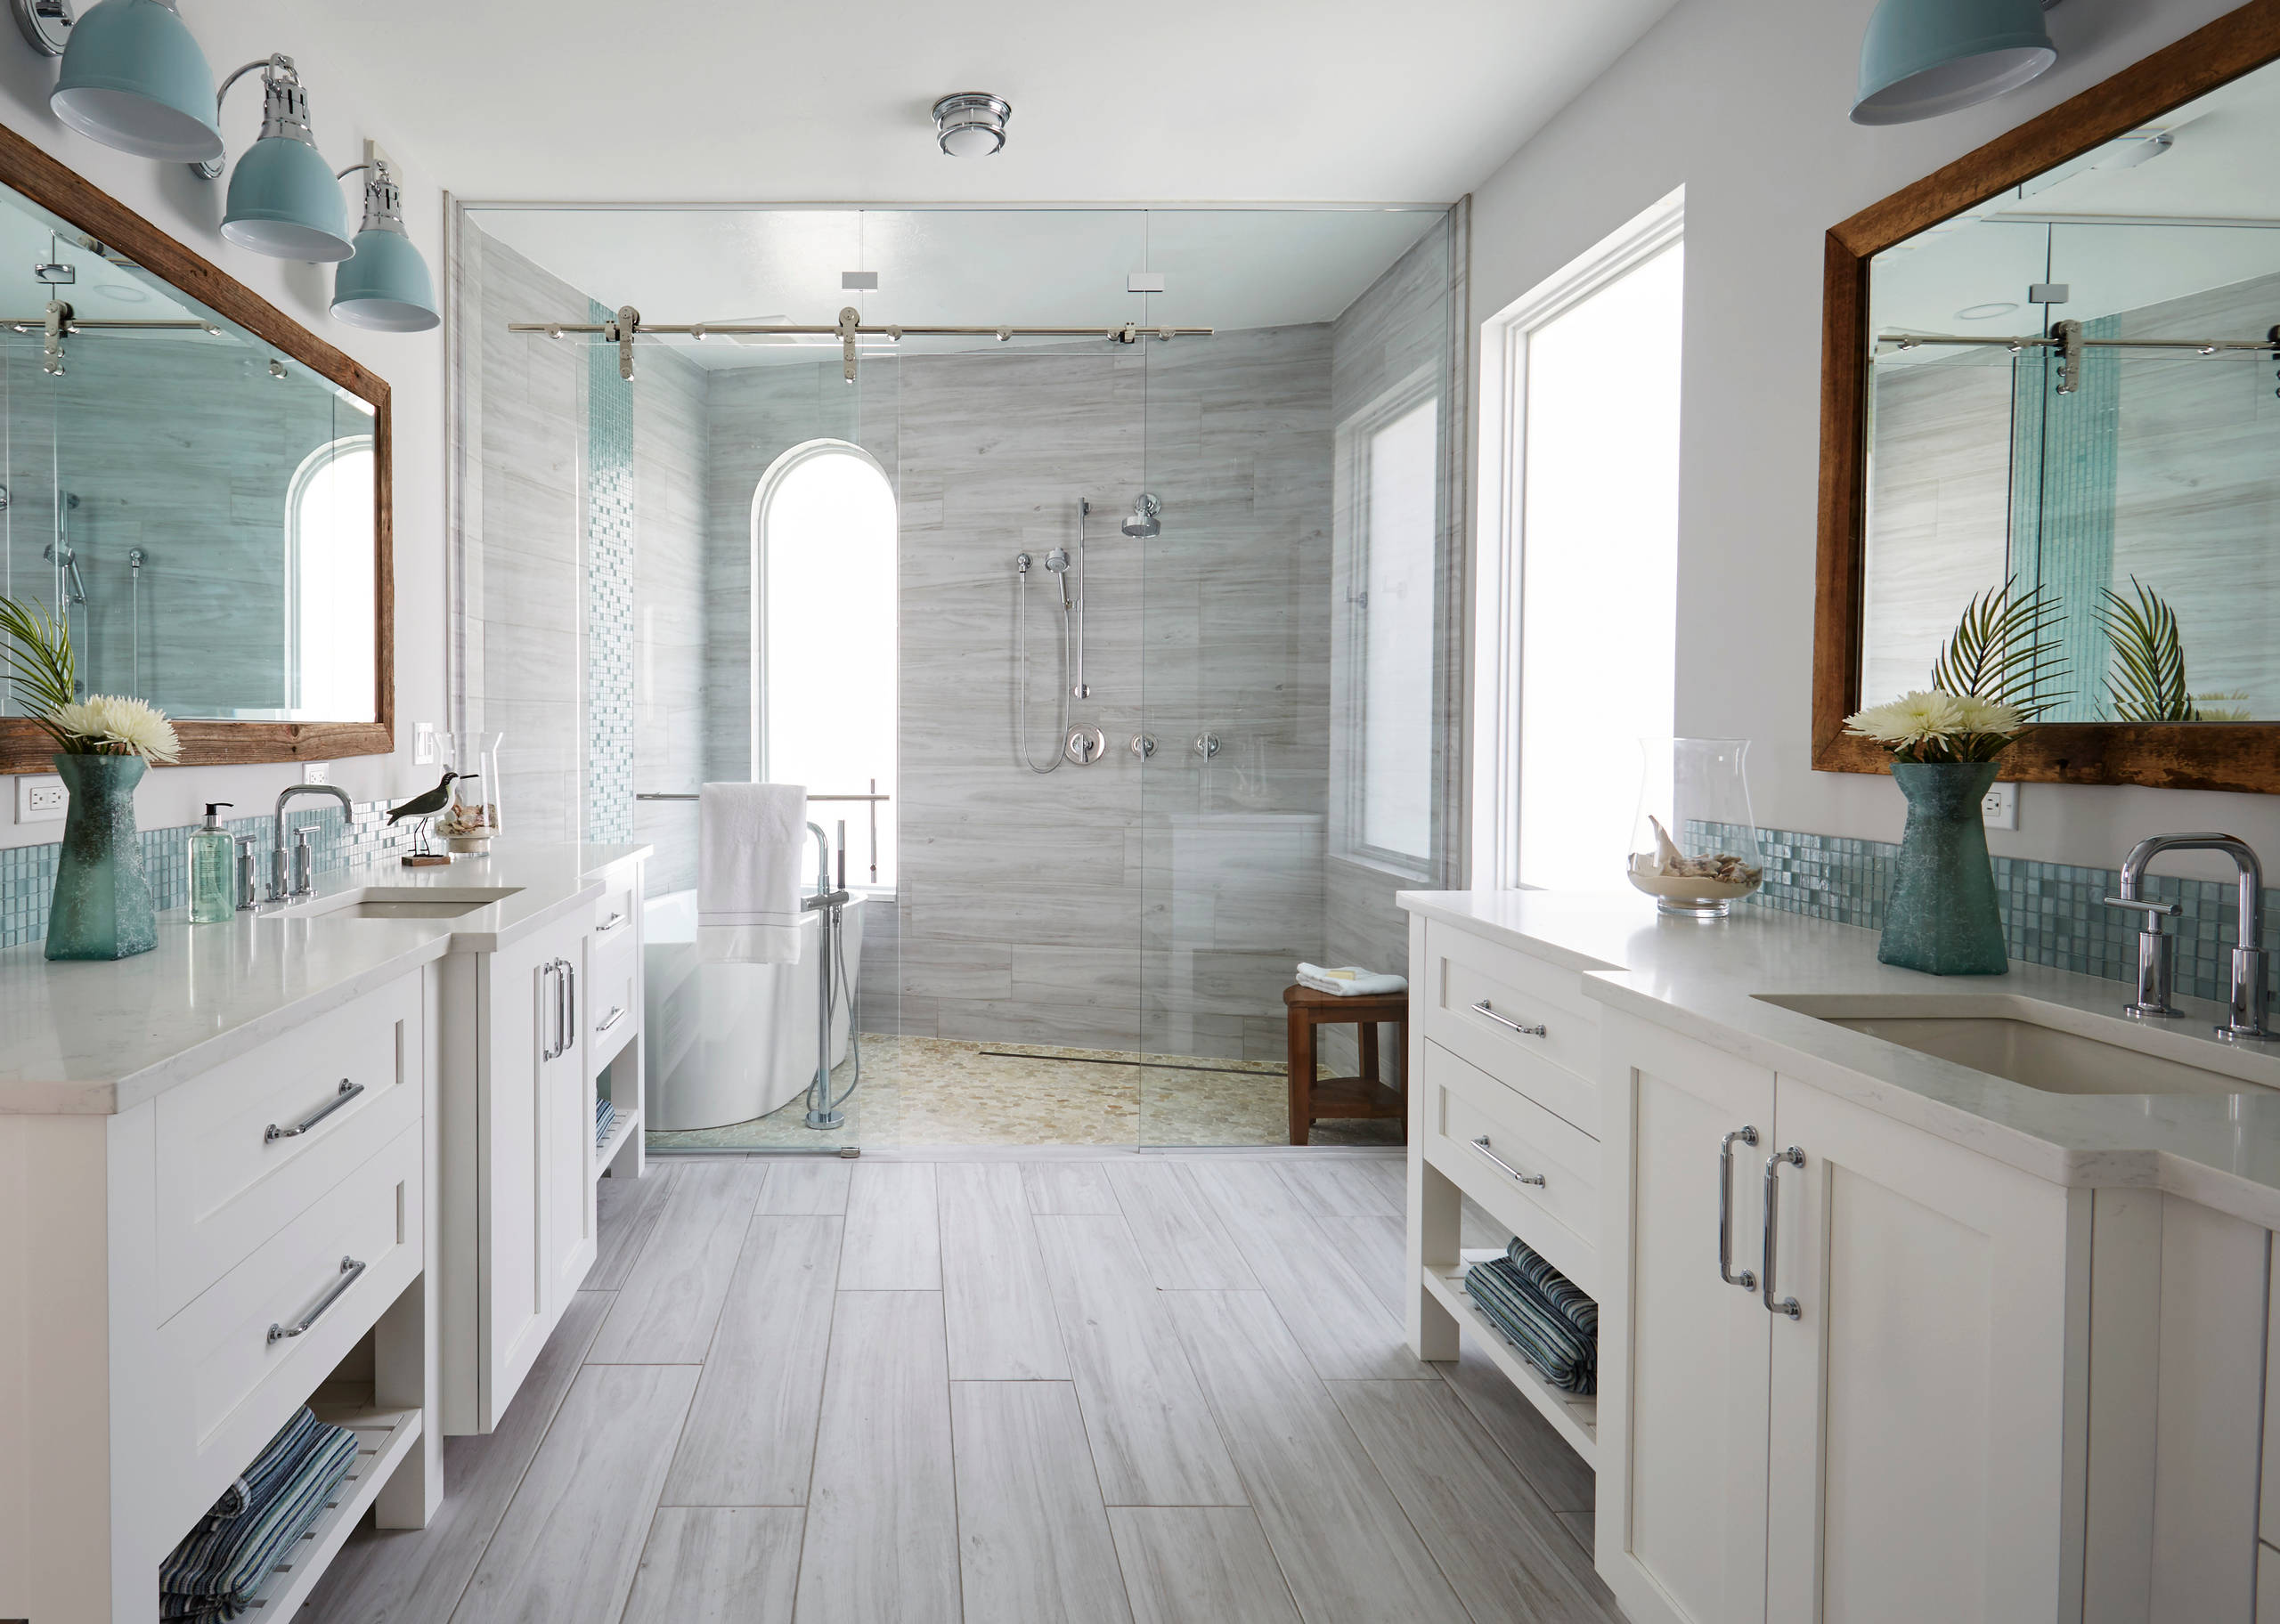 75 Wood Look Tile Floor Master Bathroom